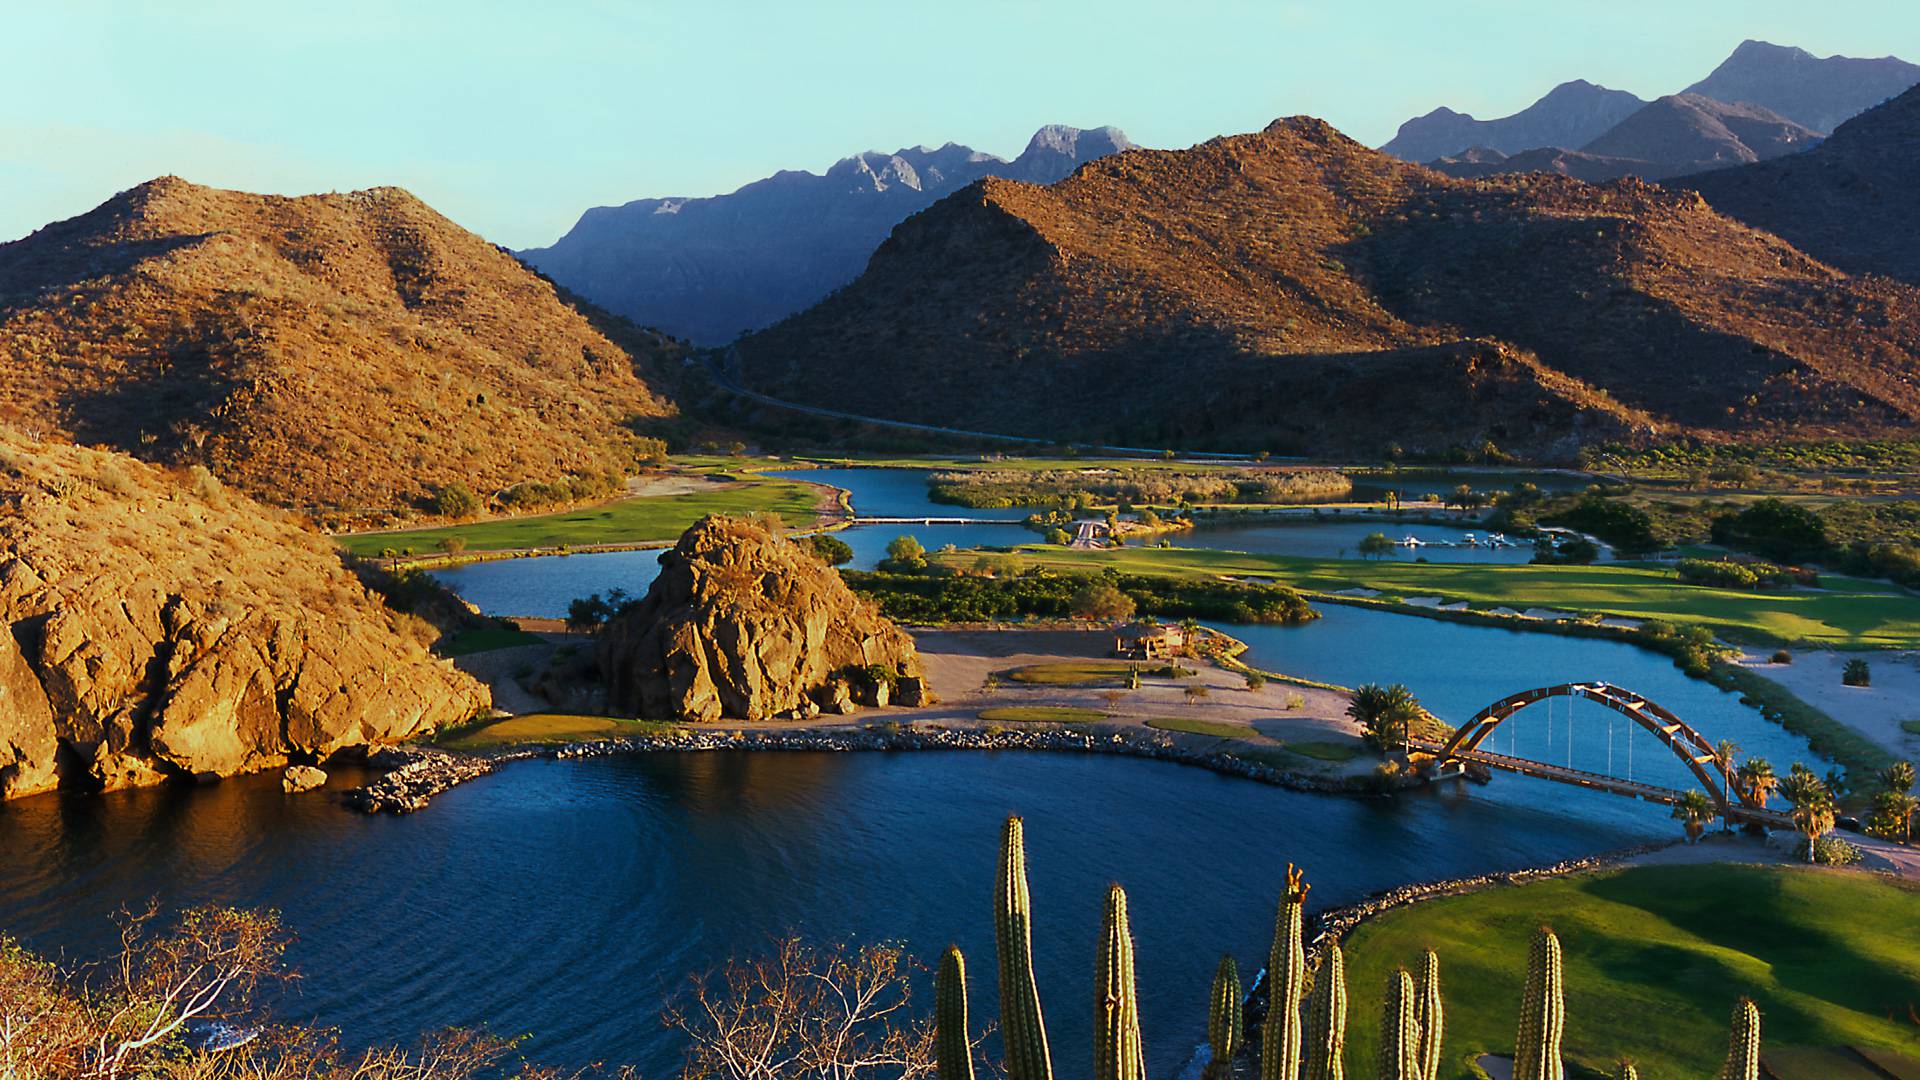 Loreto bay golf resort & spa Hotel Loreto Bay Golf Resort & Spa at Baja Loreto, Baja California Sur